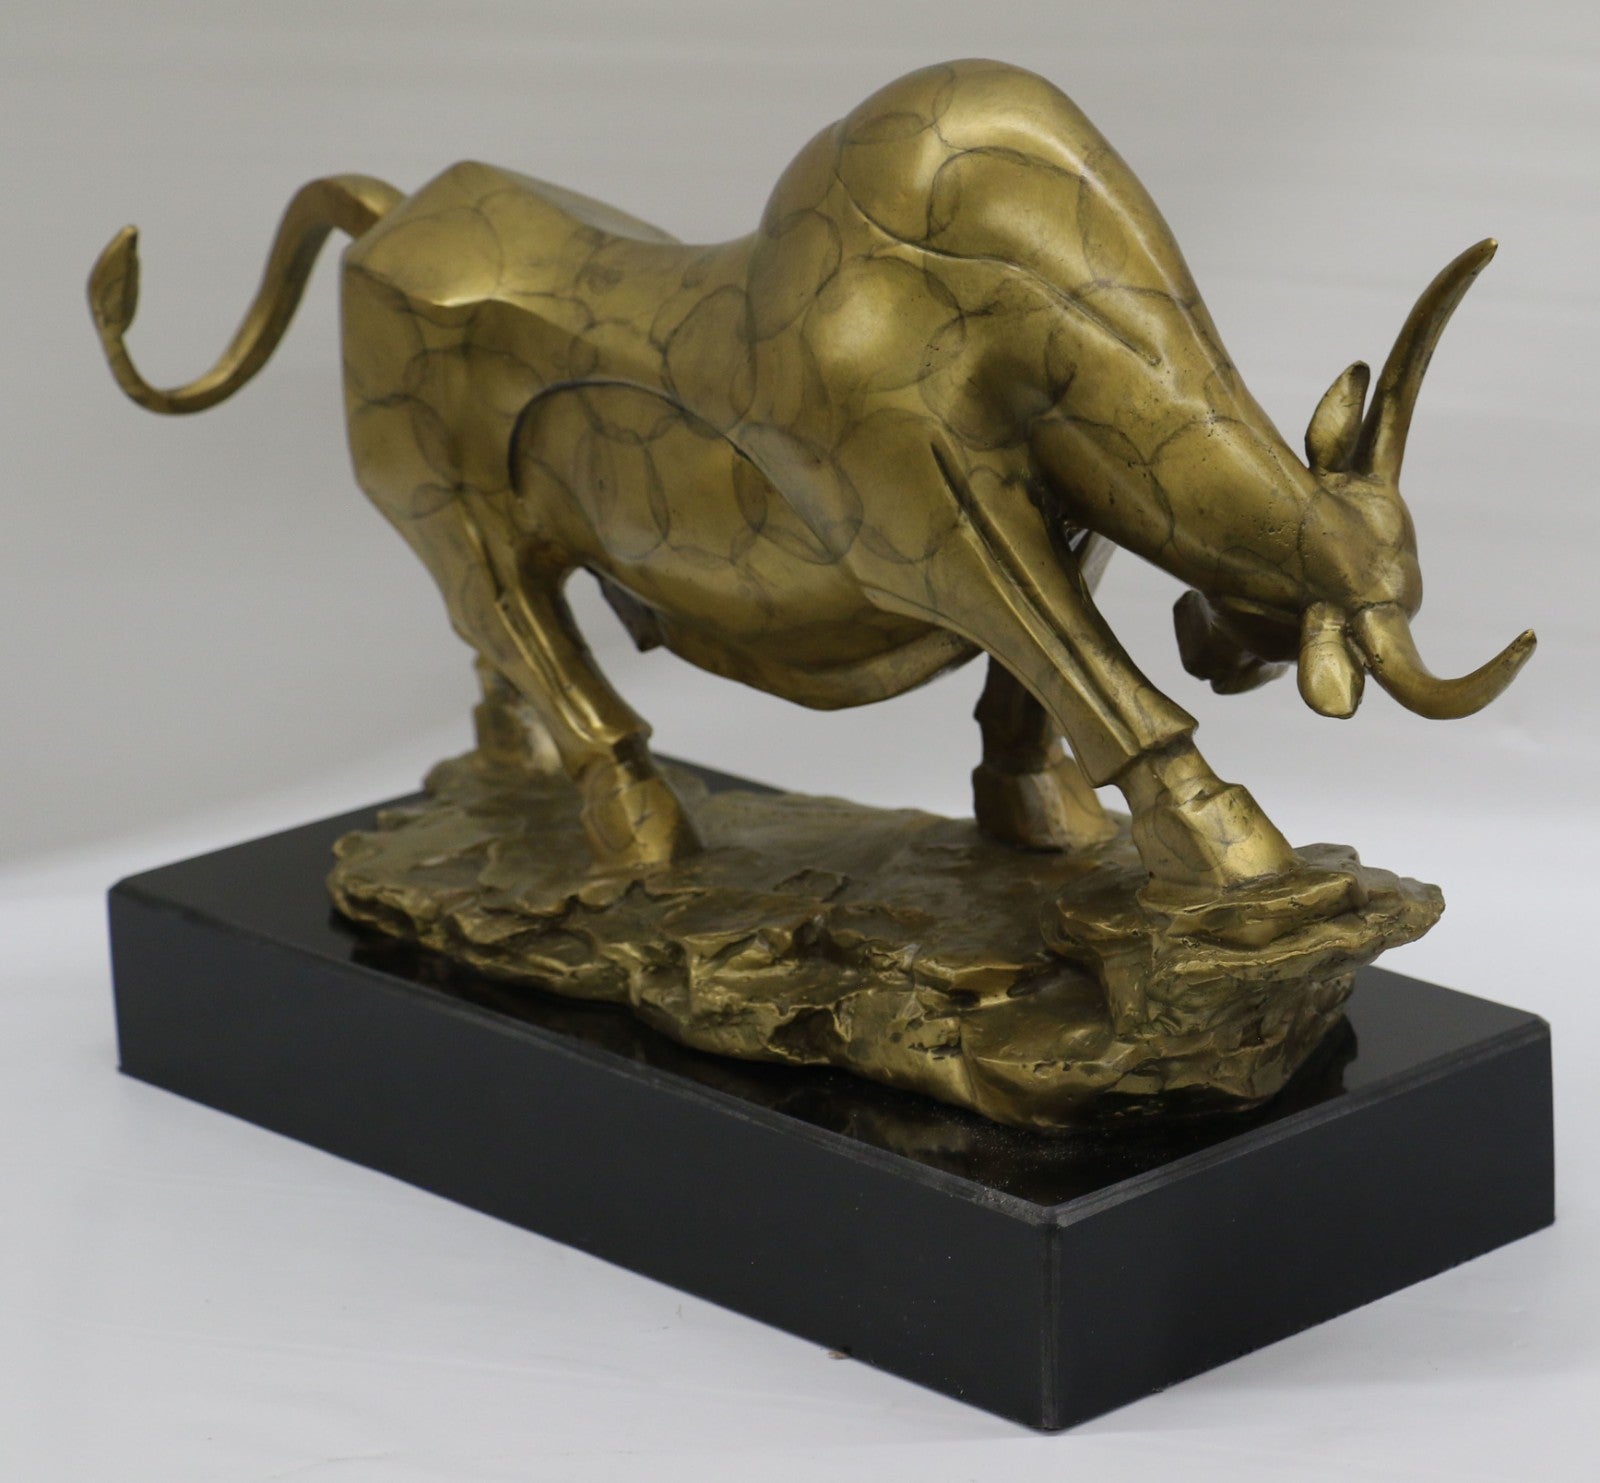 LTD EDT Bronze Coffee Wall Street Bull Market Stock OX Figure Statue Figurine